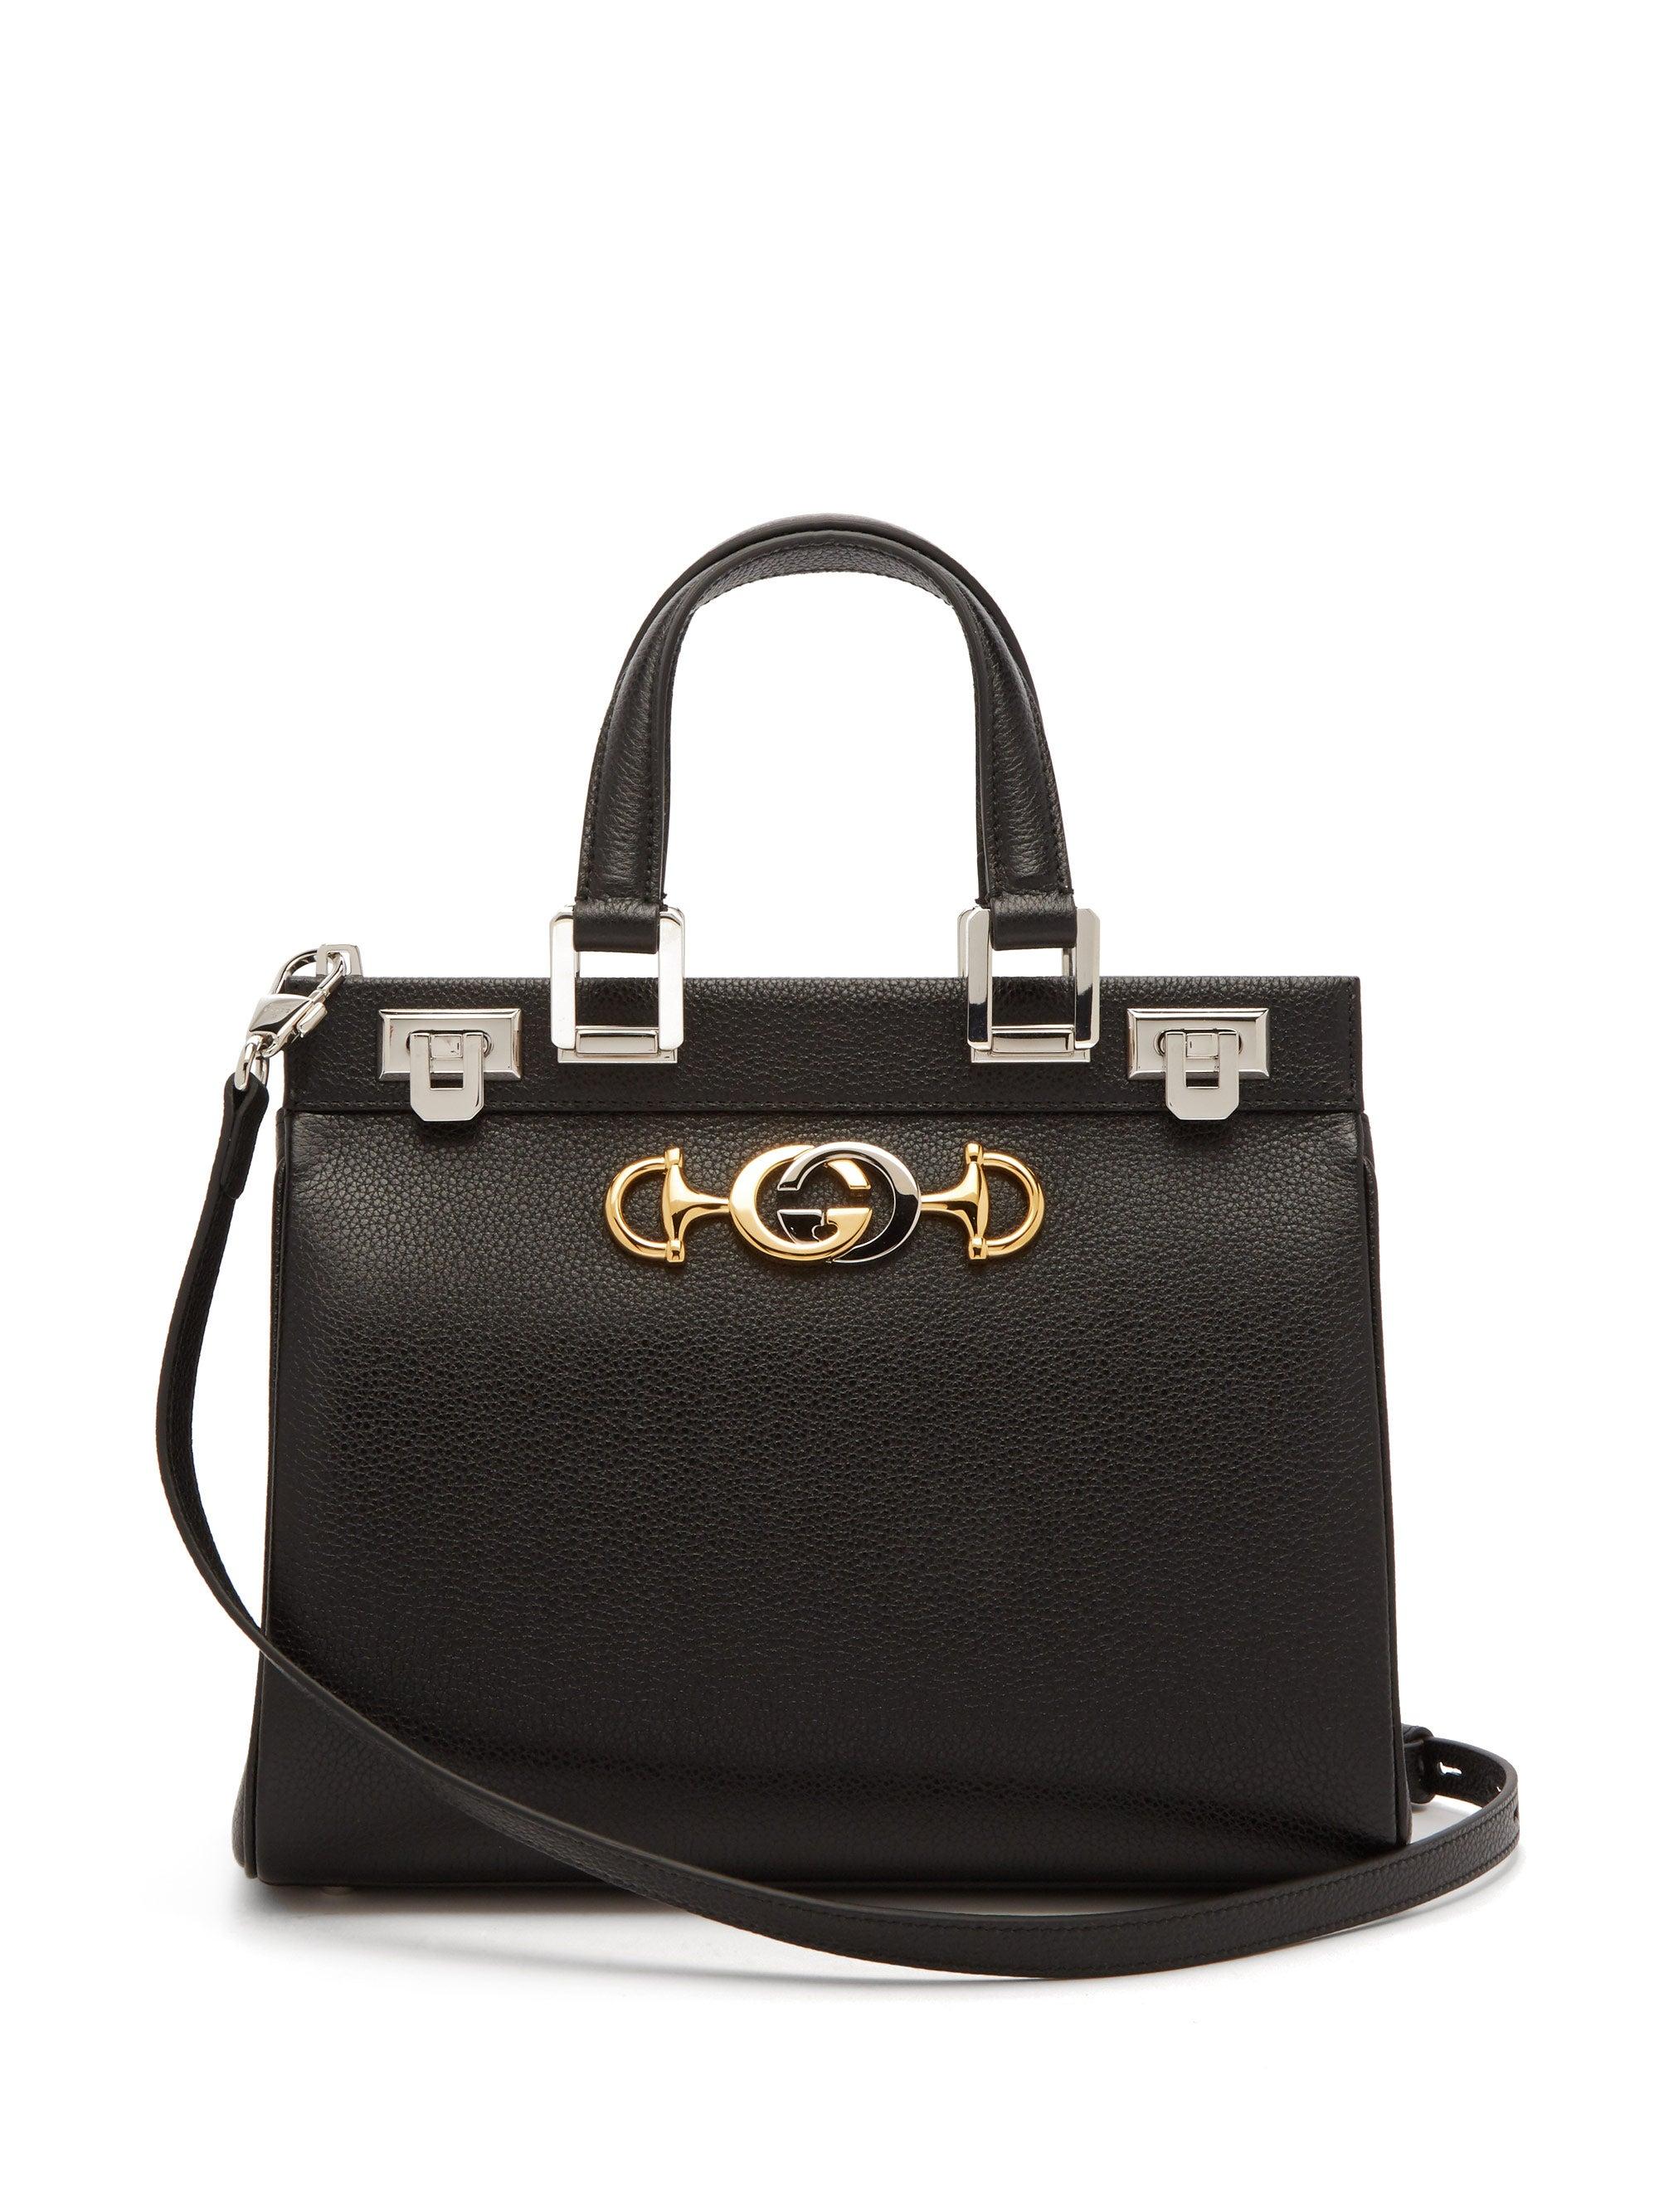 Gucci Zumi Grainy Leather Medium Top Handle Bag in Black | Lyst